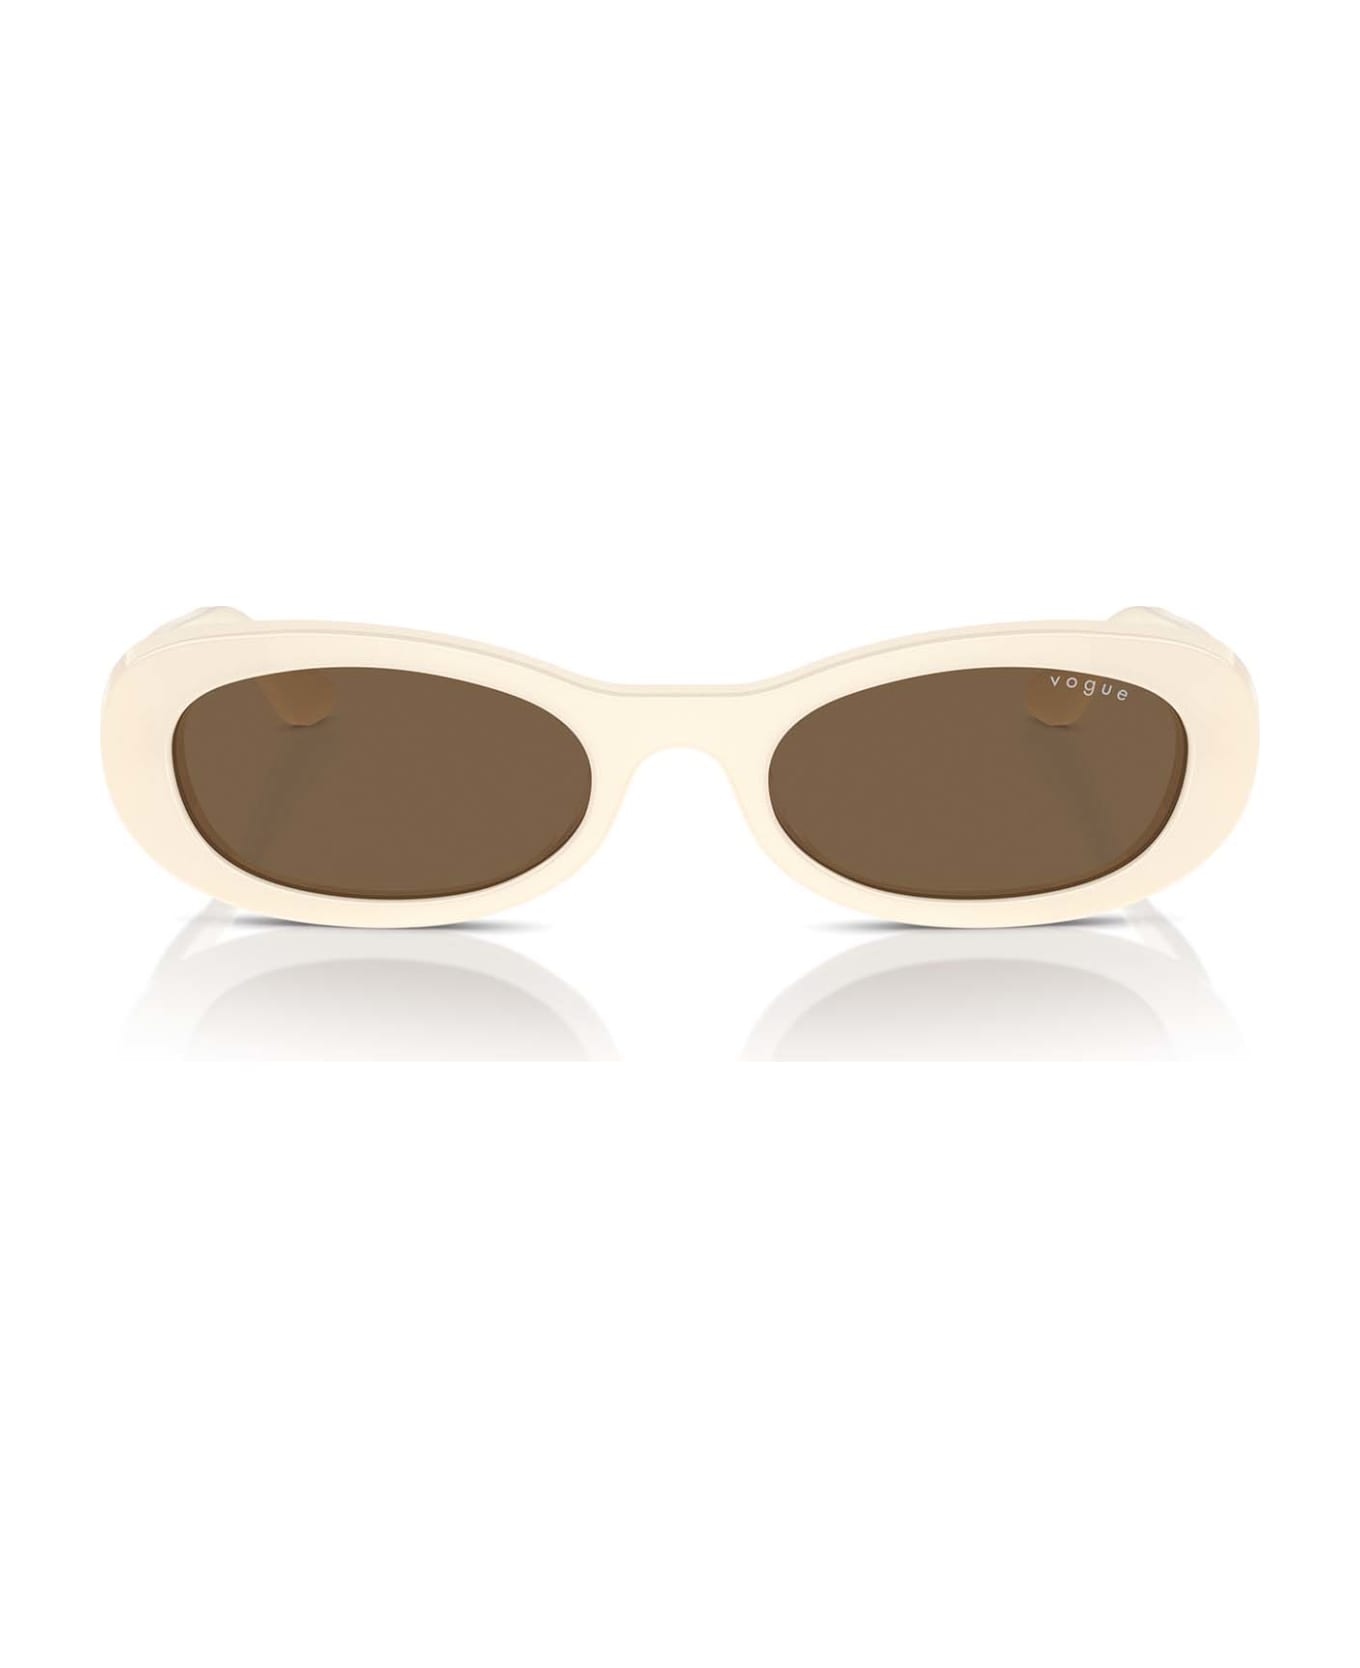 Vogue Eyewear Vo5582s Full Ivory Sunglasses - Full Ivory サングラス